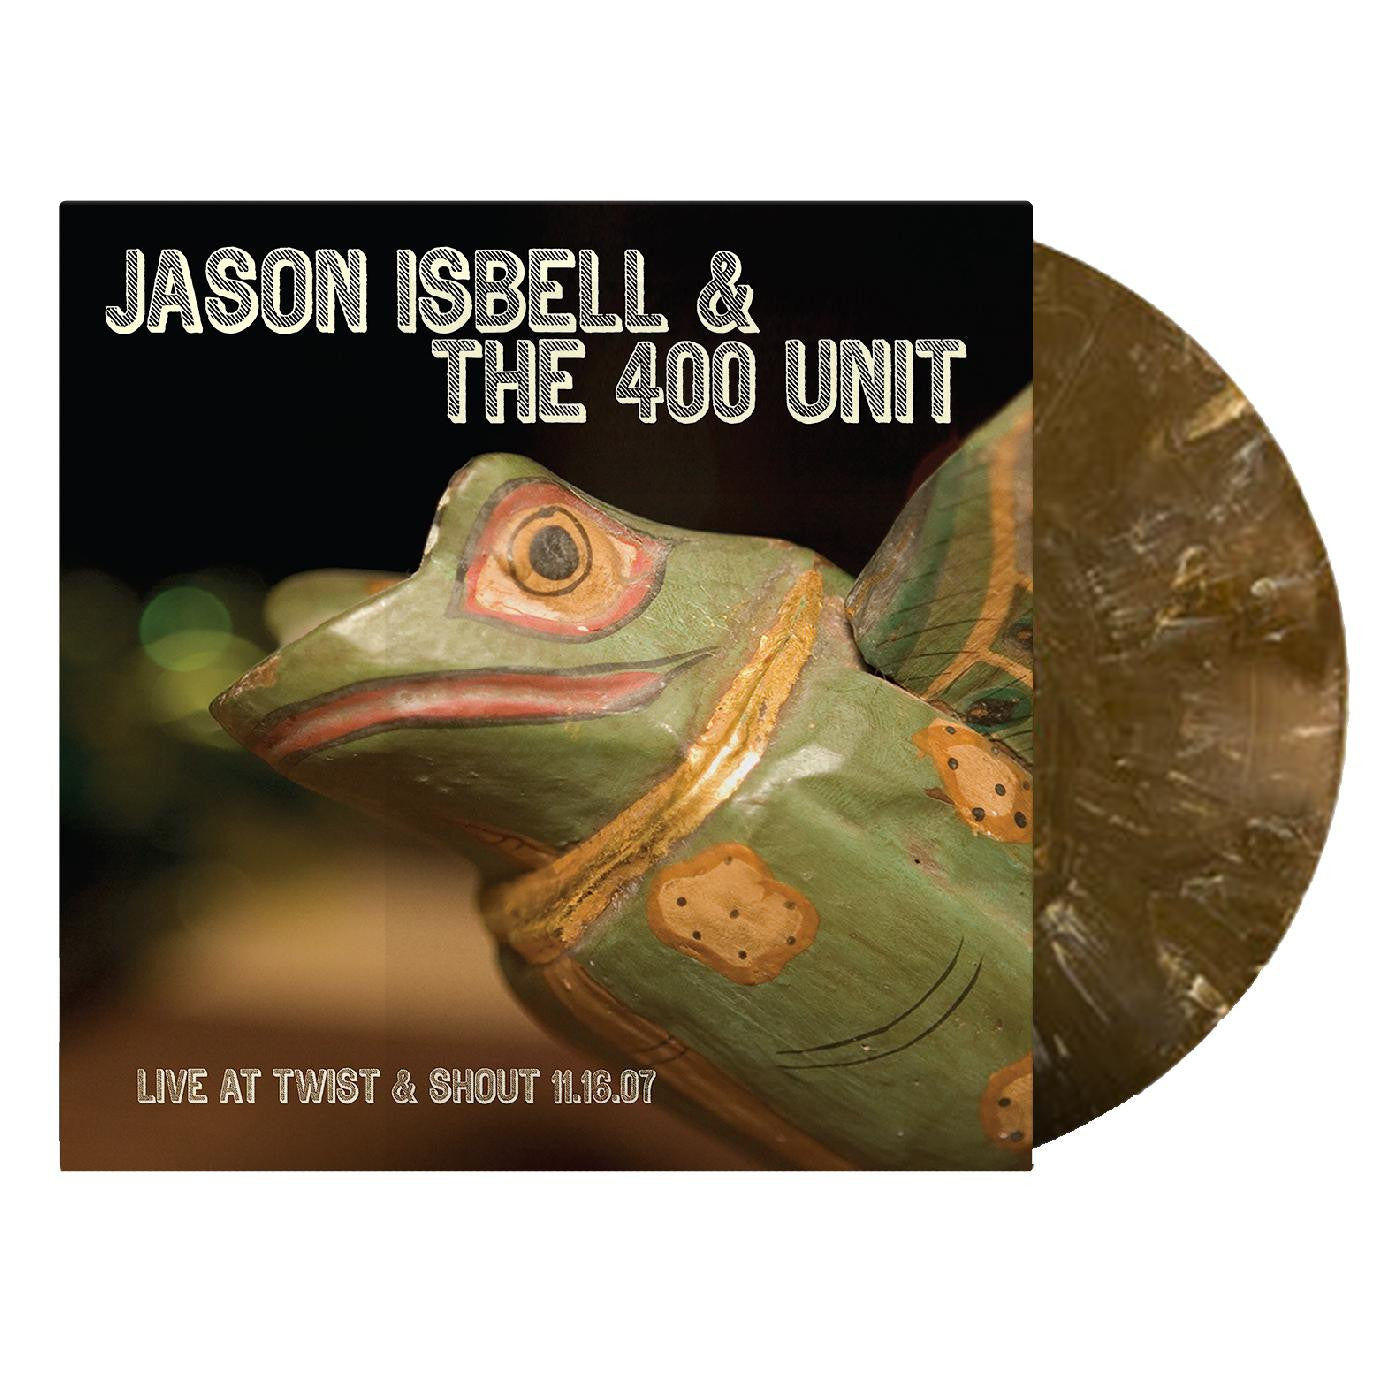 JASON ISBELL & THE 400 UNIT • Twist & Shout 11.16.07 (Root Beer Swirl Vinyl) • LP